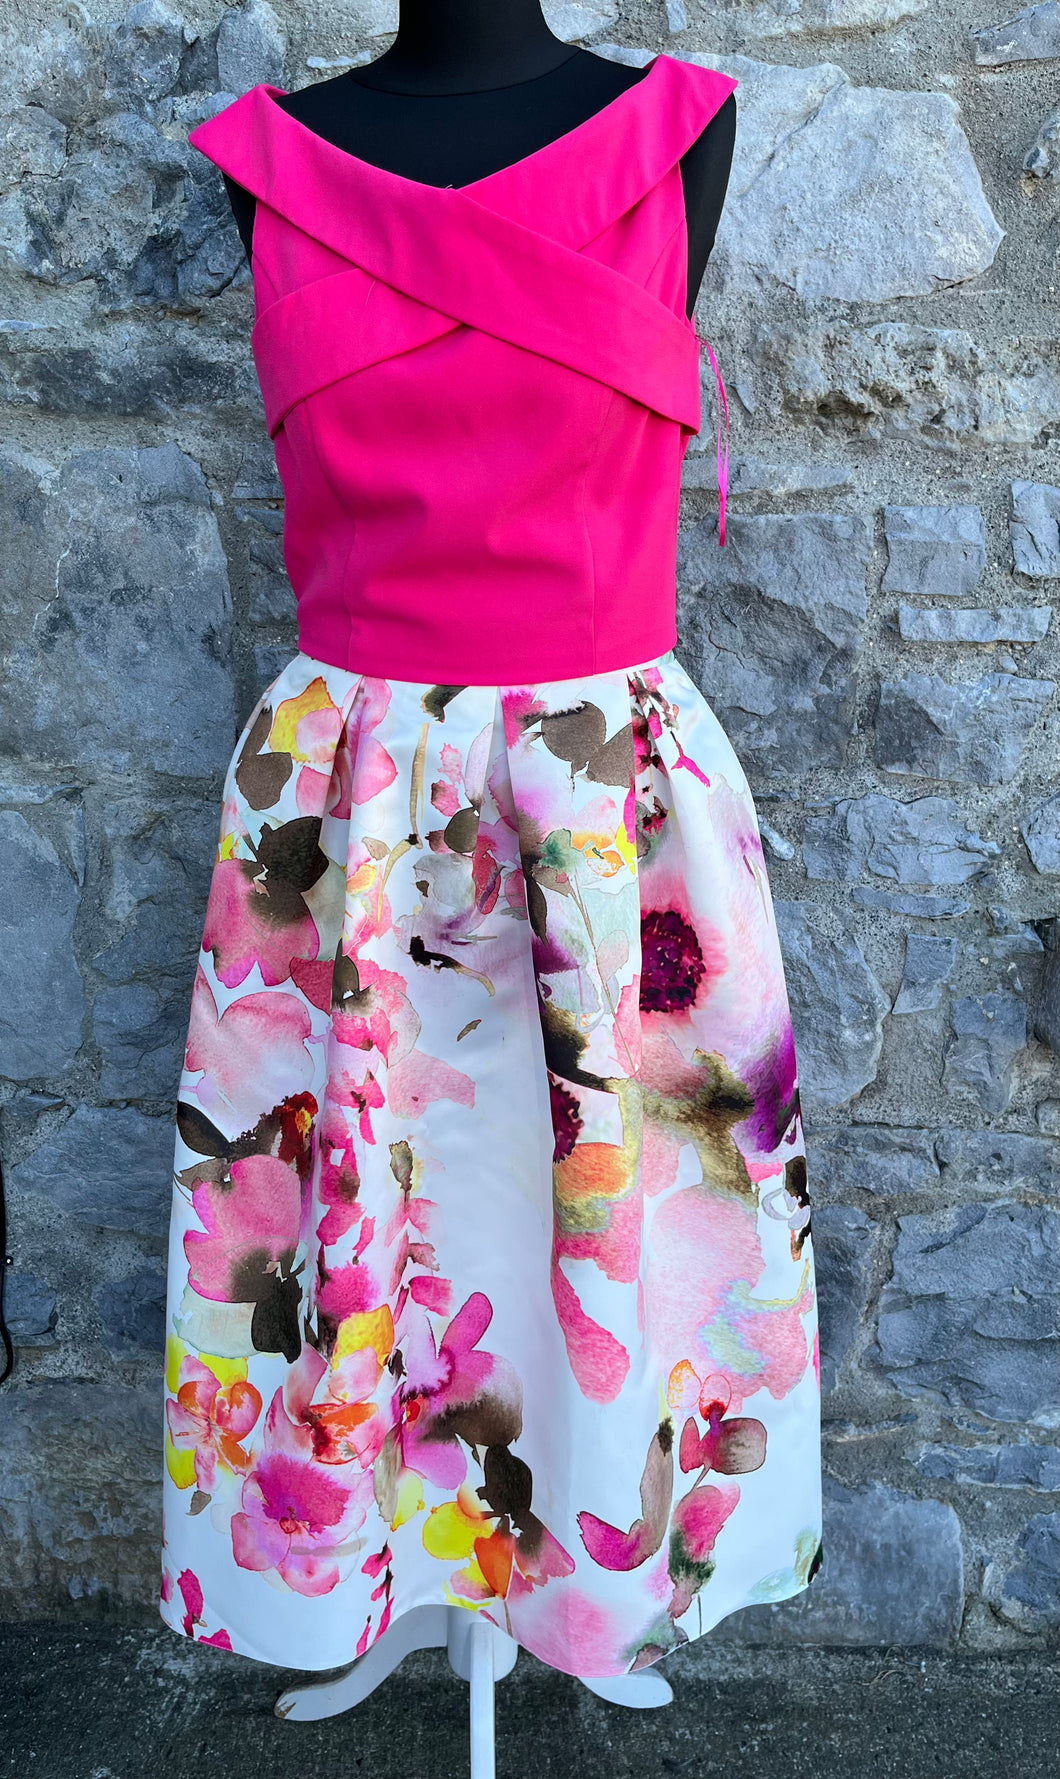 Floral skirt & pink top uk10